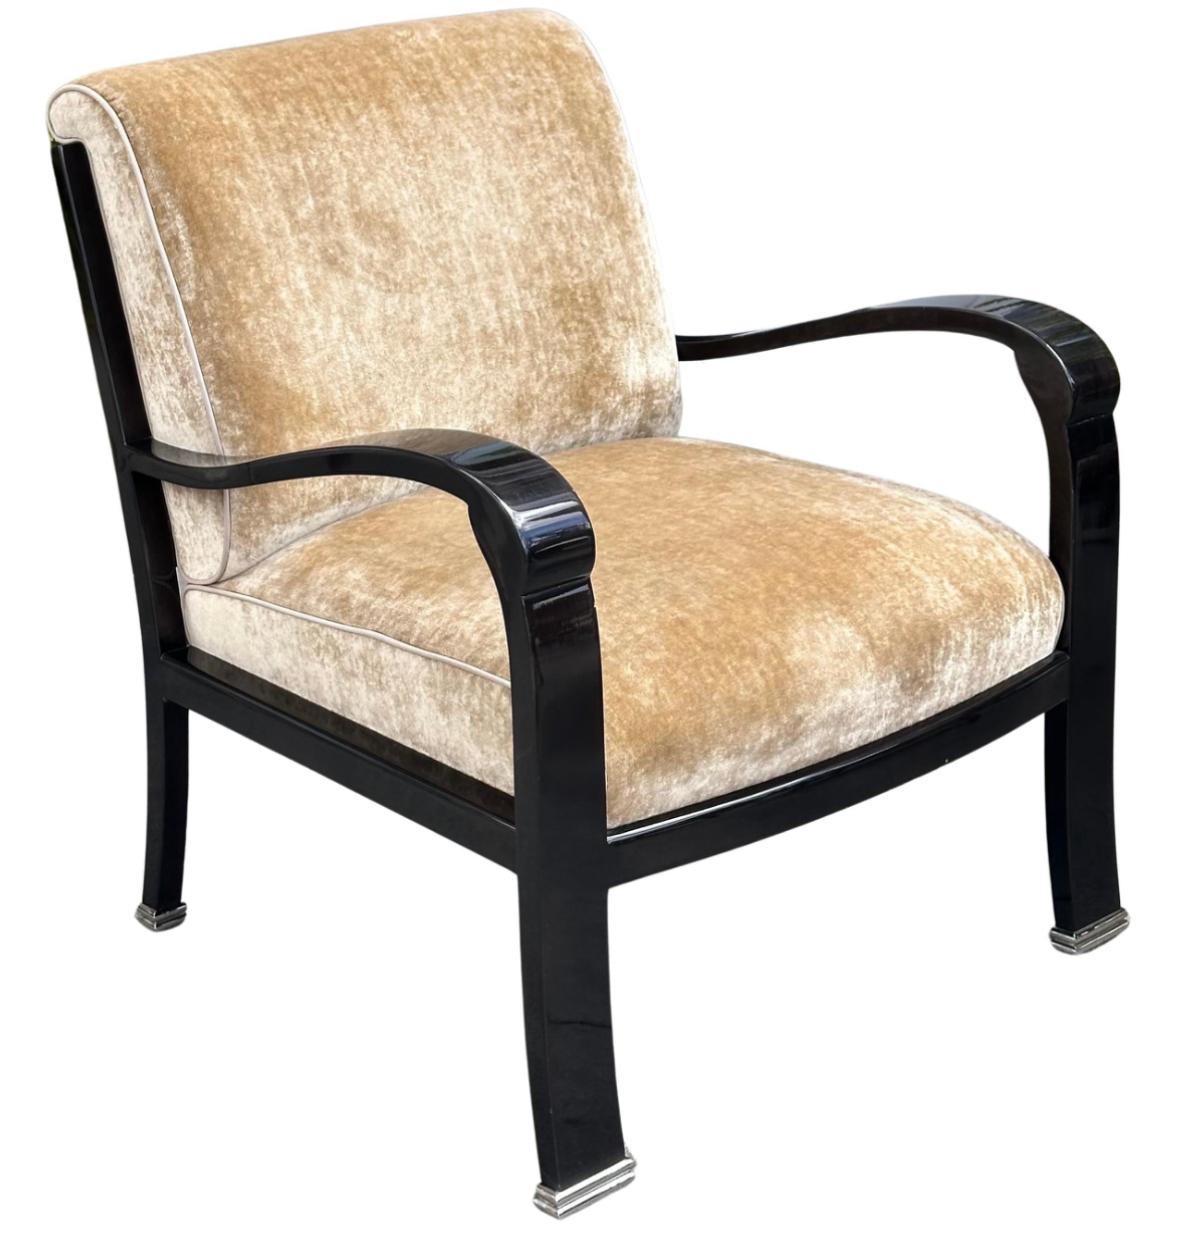 Sally Sirkin Lewis for J. Robert Scott Art Deco Club Chair For Sale